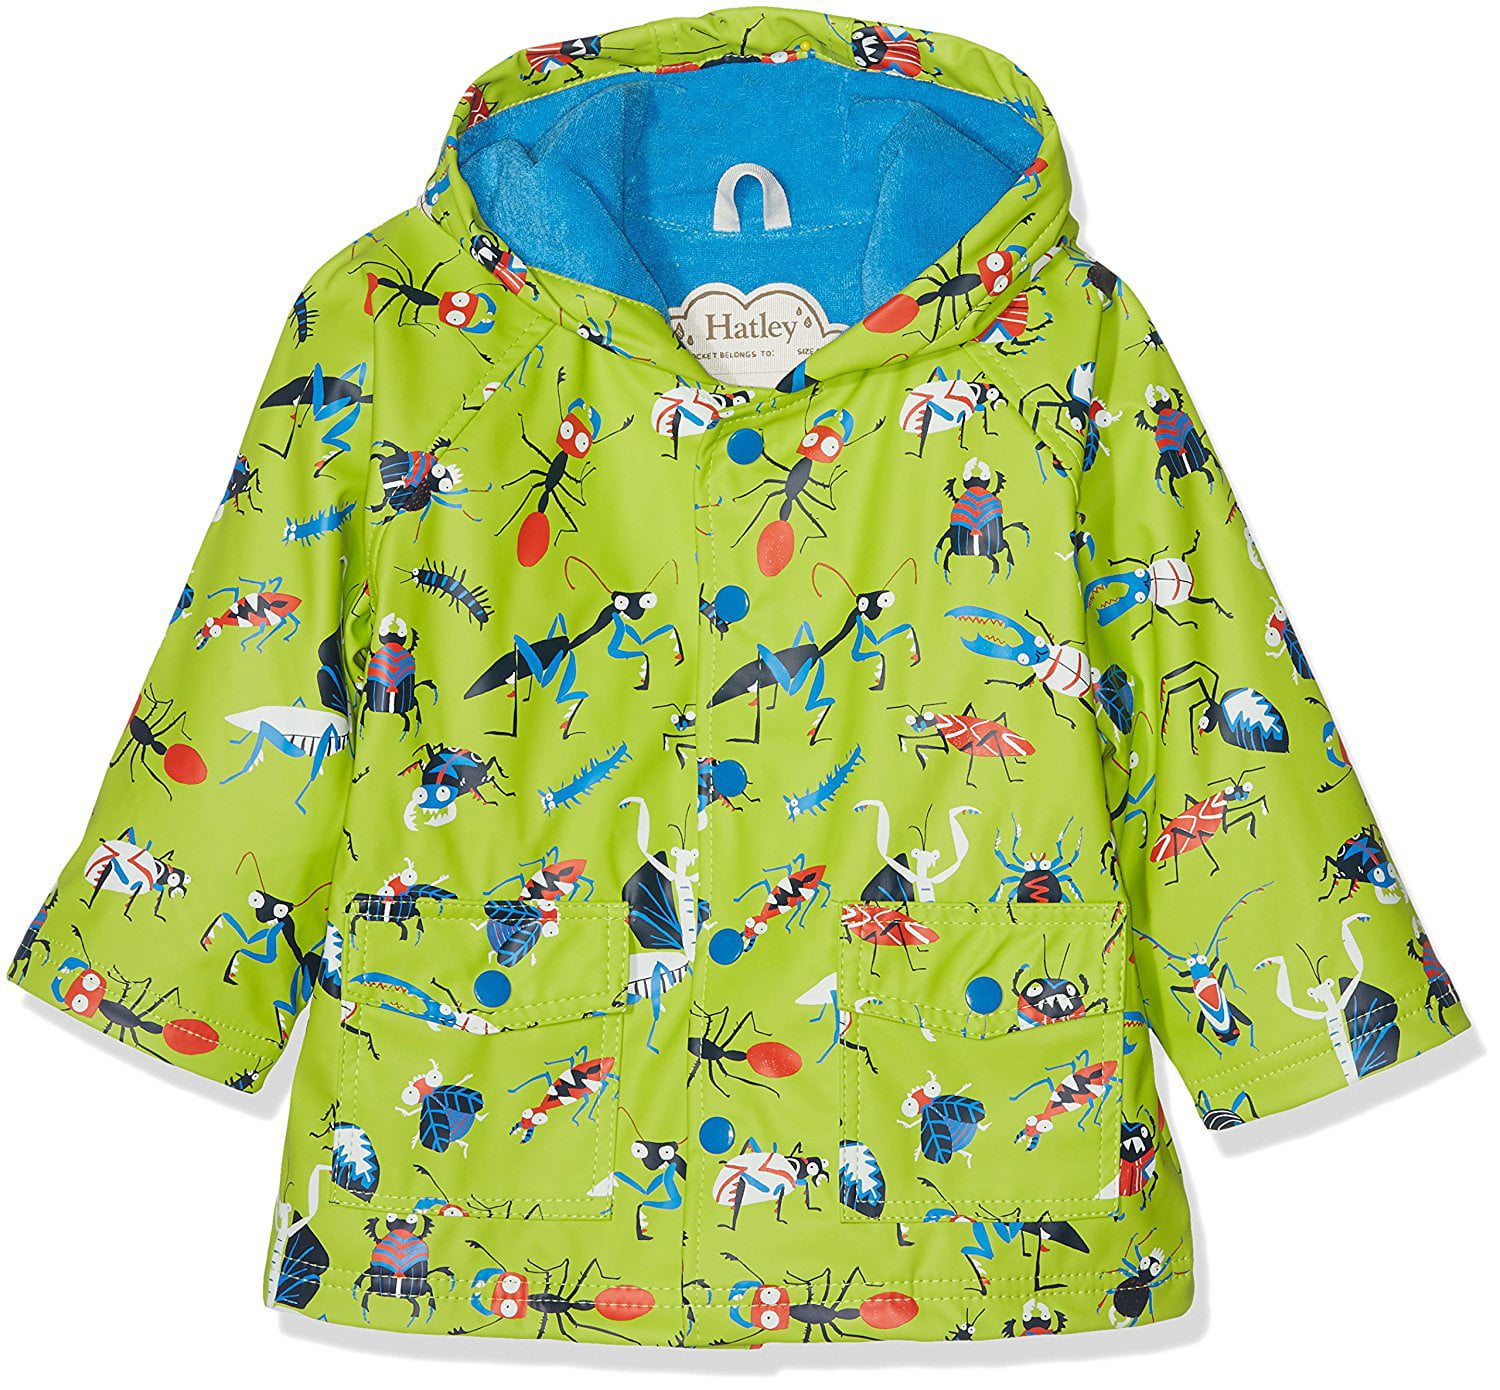 Hatley Boy's Printed Rain Jacket Raincoat